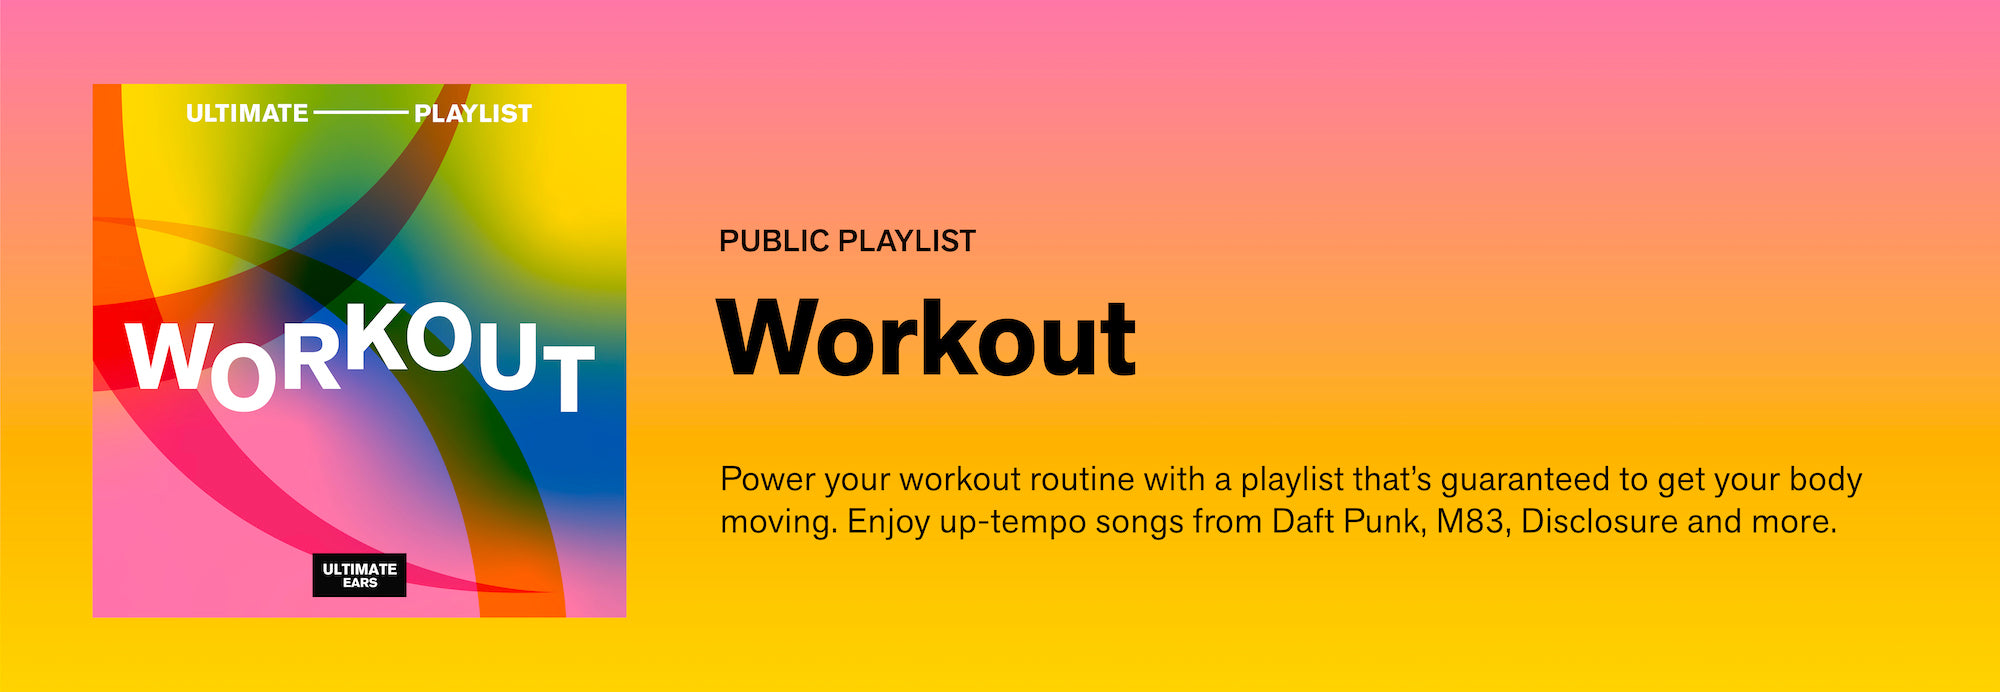 Playlist: Workout